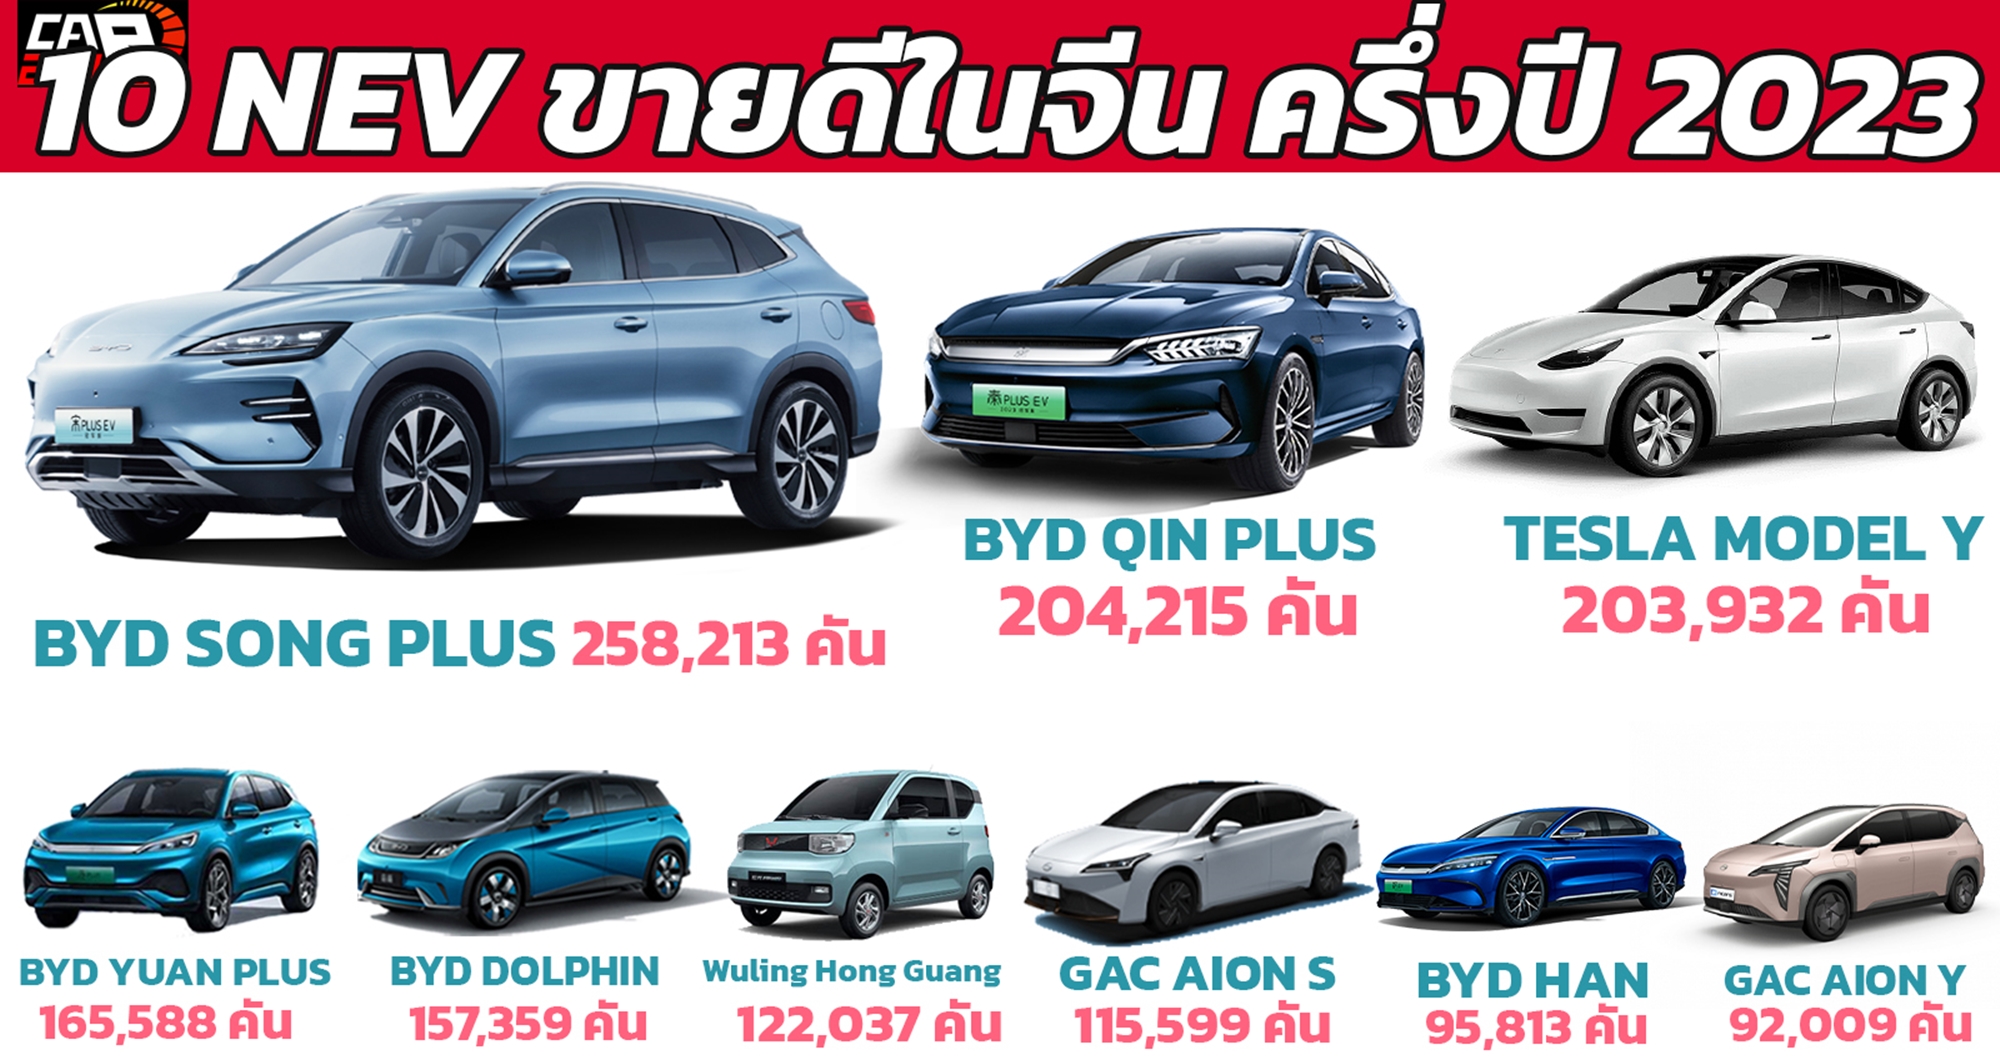 BYD Song Plus นำยอดขายรถยนต์พลังงานใหม่ในจีน ครึ่งปีแรก 2023 มกราคม – มิถุนายน 2023